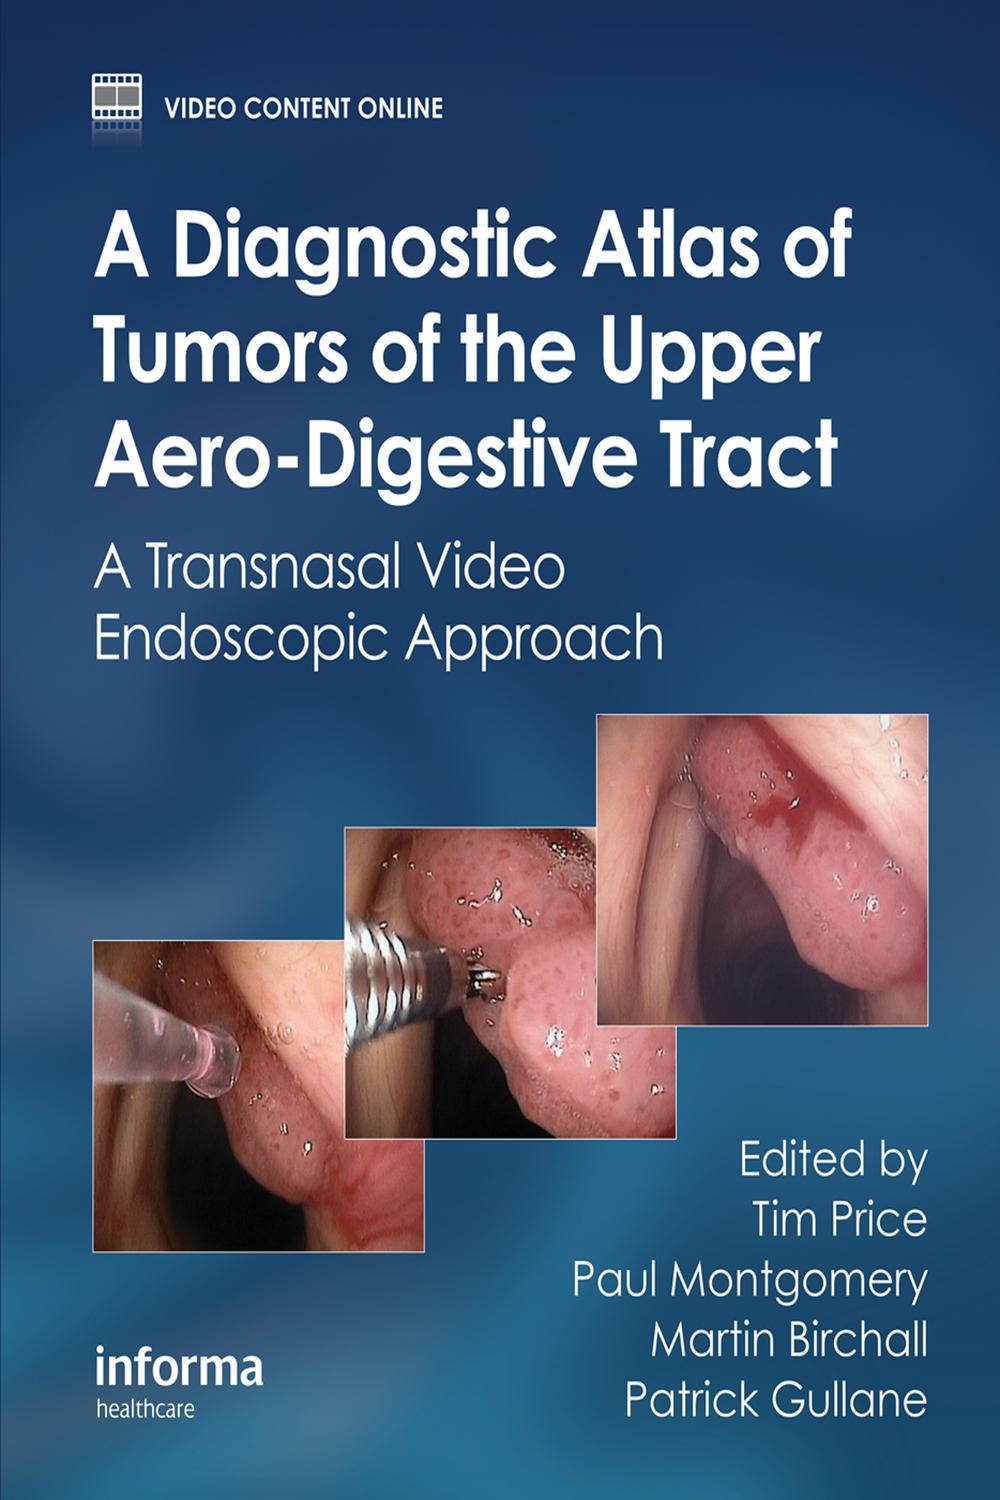 A Diagnostic Atlas of Tumors of the Upper Aero-Digestive Tract - Tim Price, Paul Montgomery, Martin Birchall, Patrick Gullane